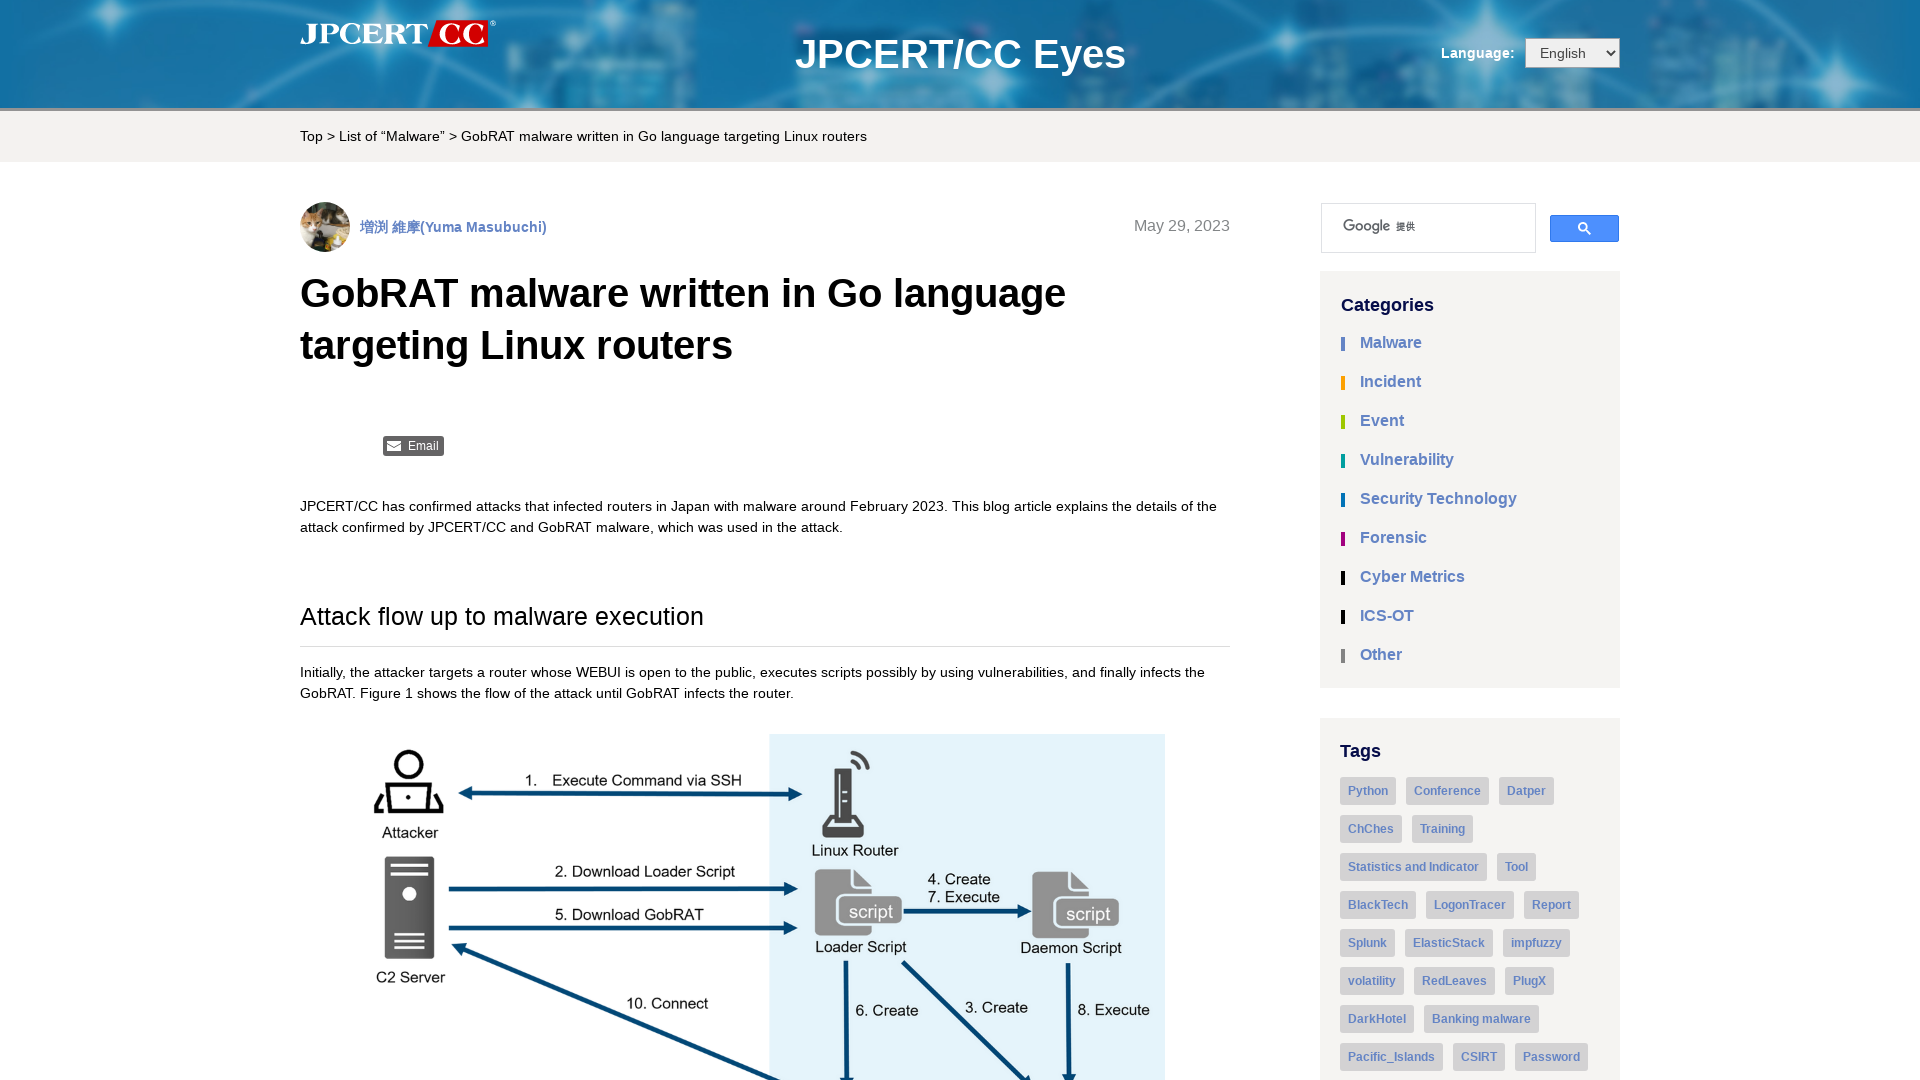 GobRAT malware written in Go language targeting Linux routers - JPCERT/CC Eyes | JPCERT Coordination Center official Blog